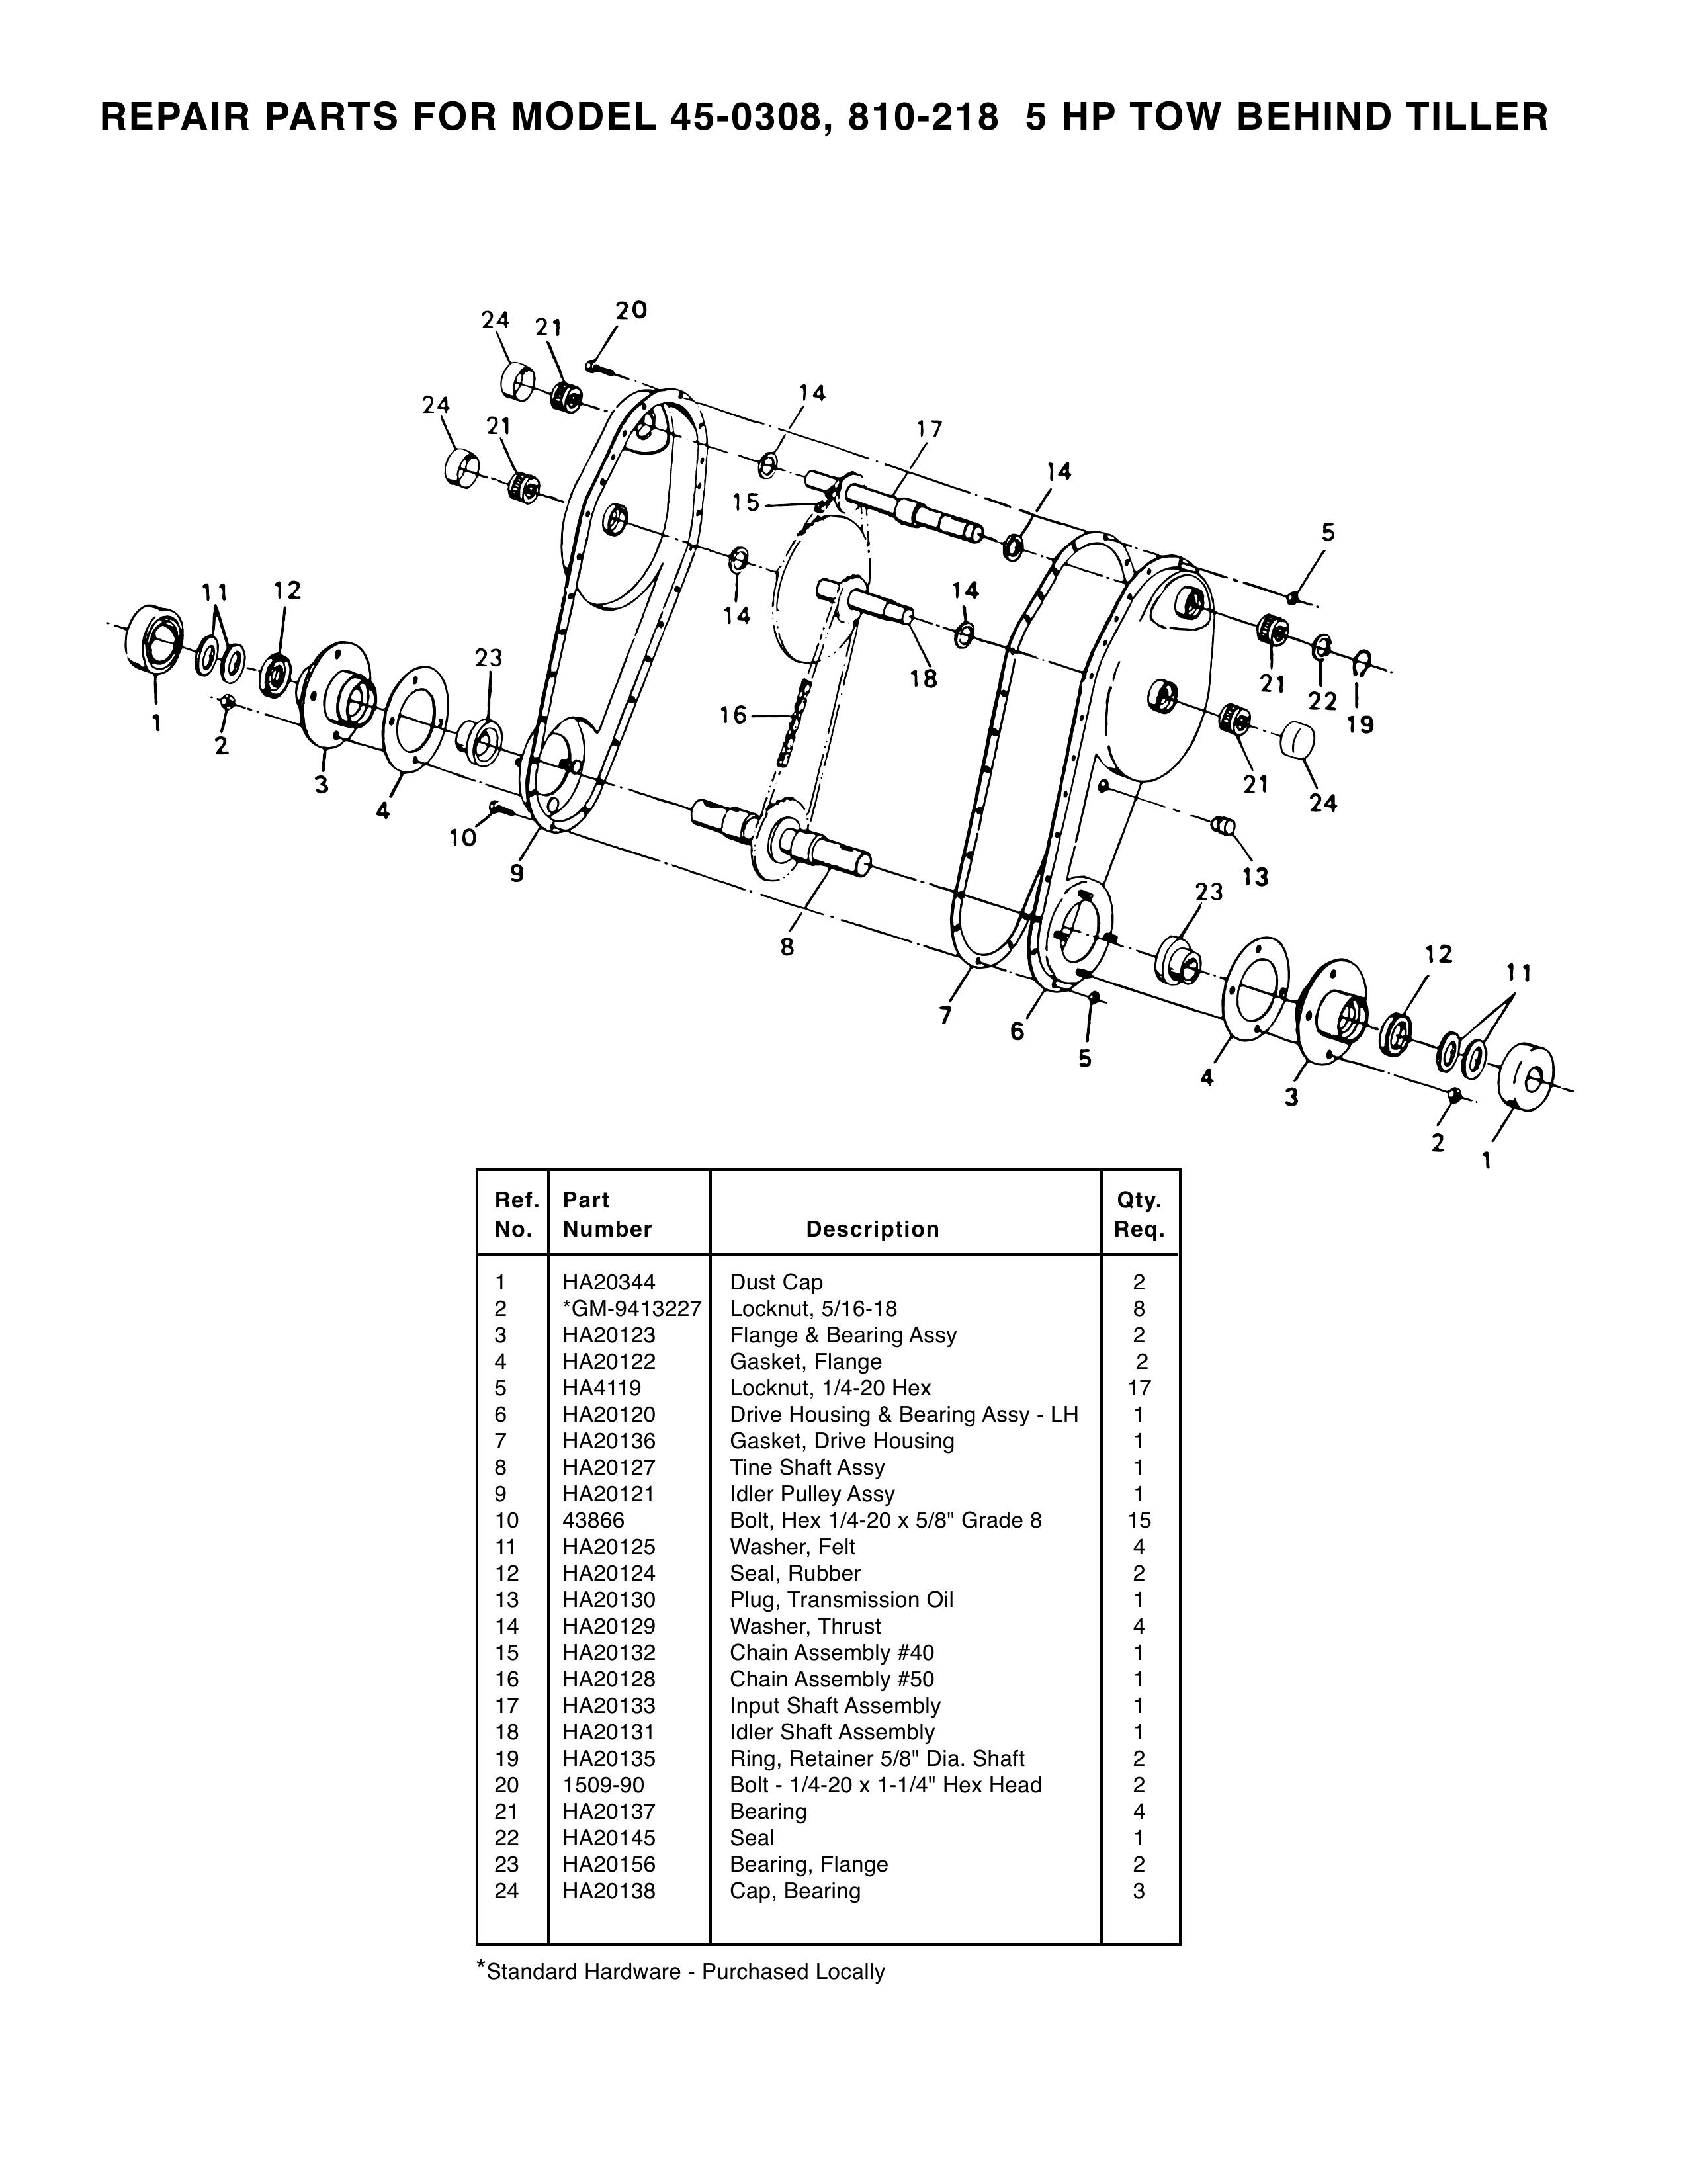 Agri-Fab 810-218 Tiller User Manual